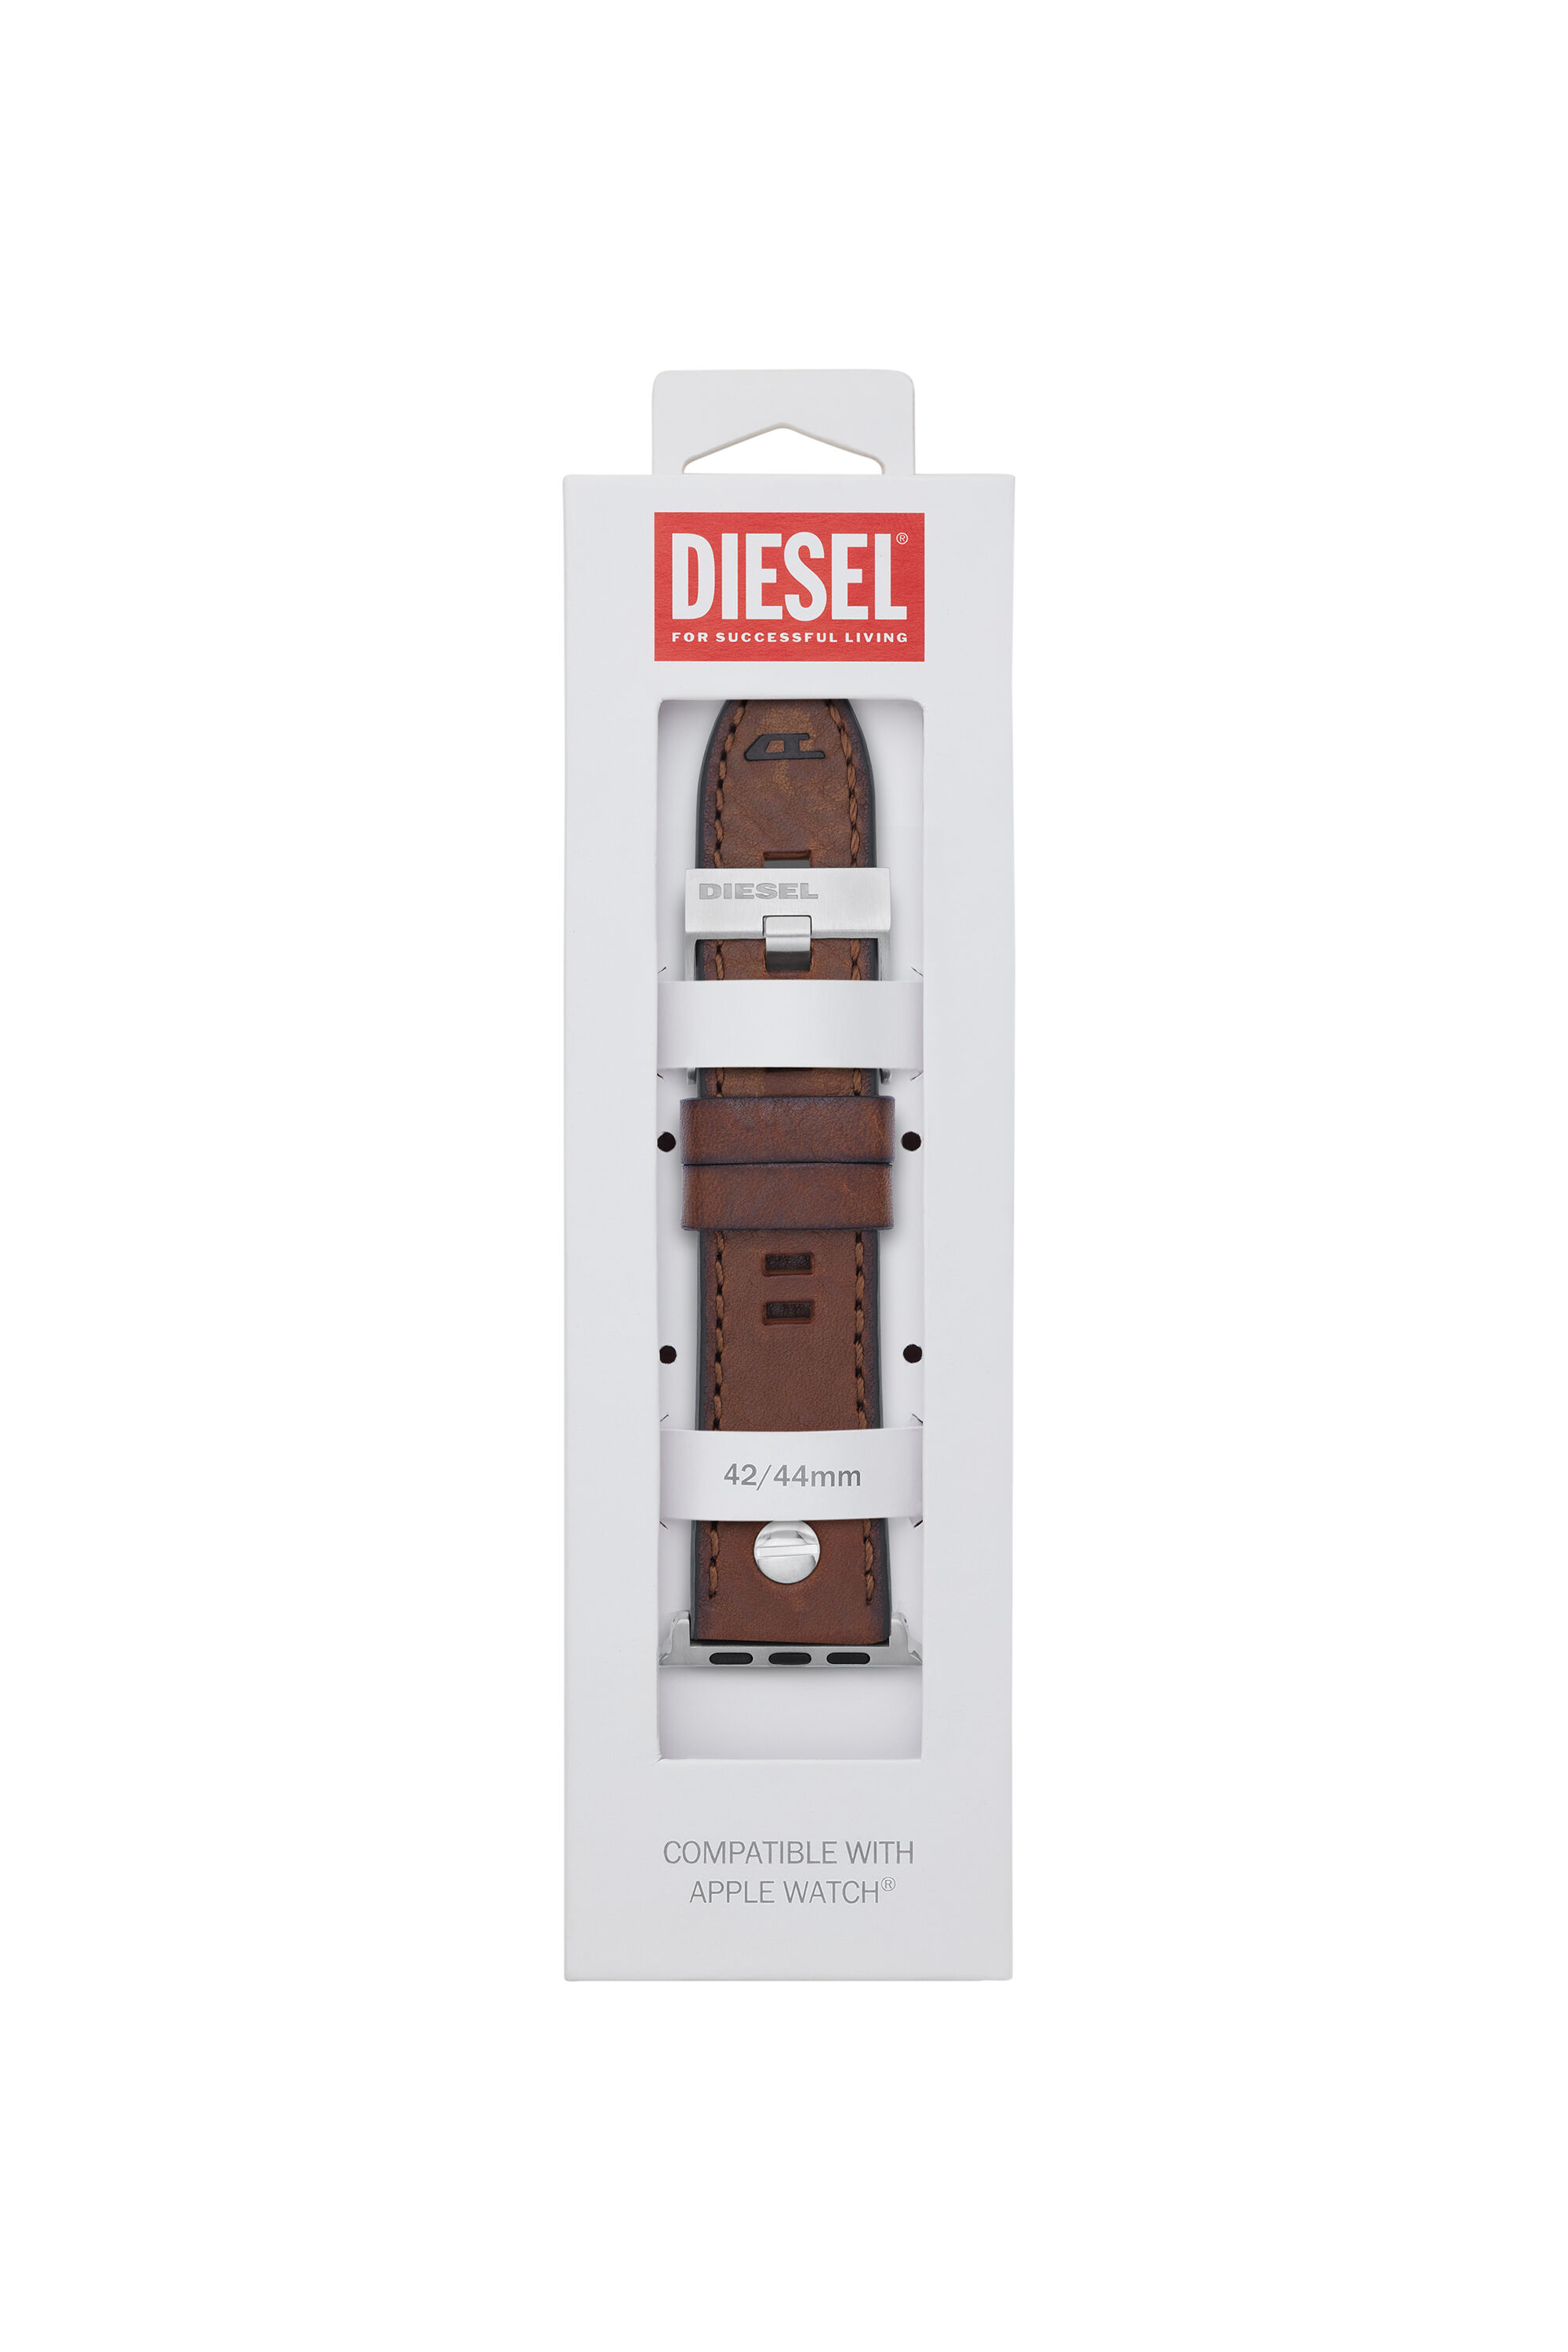 Diesel - DSS002, Braun - Image 2